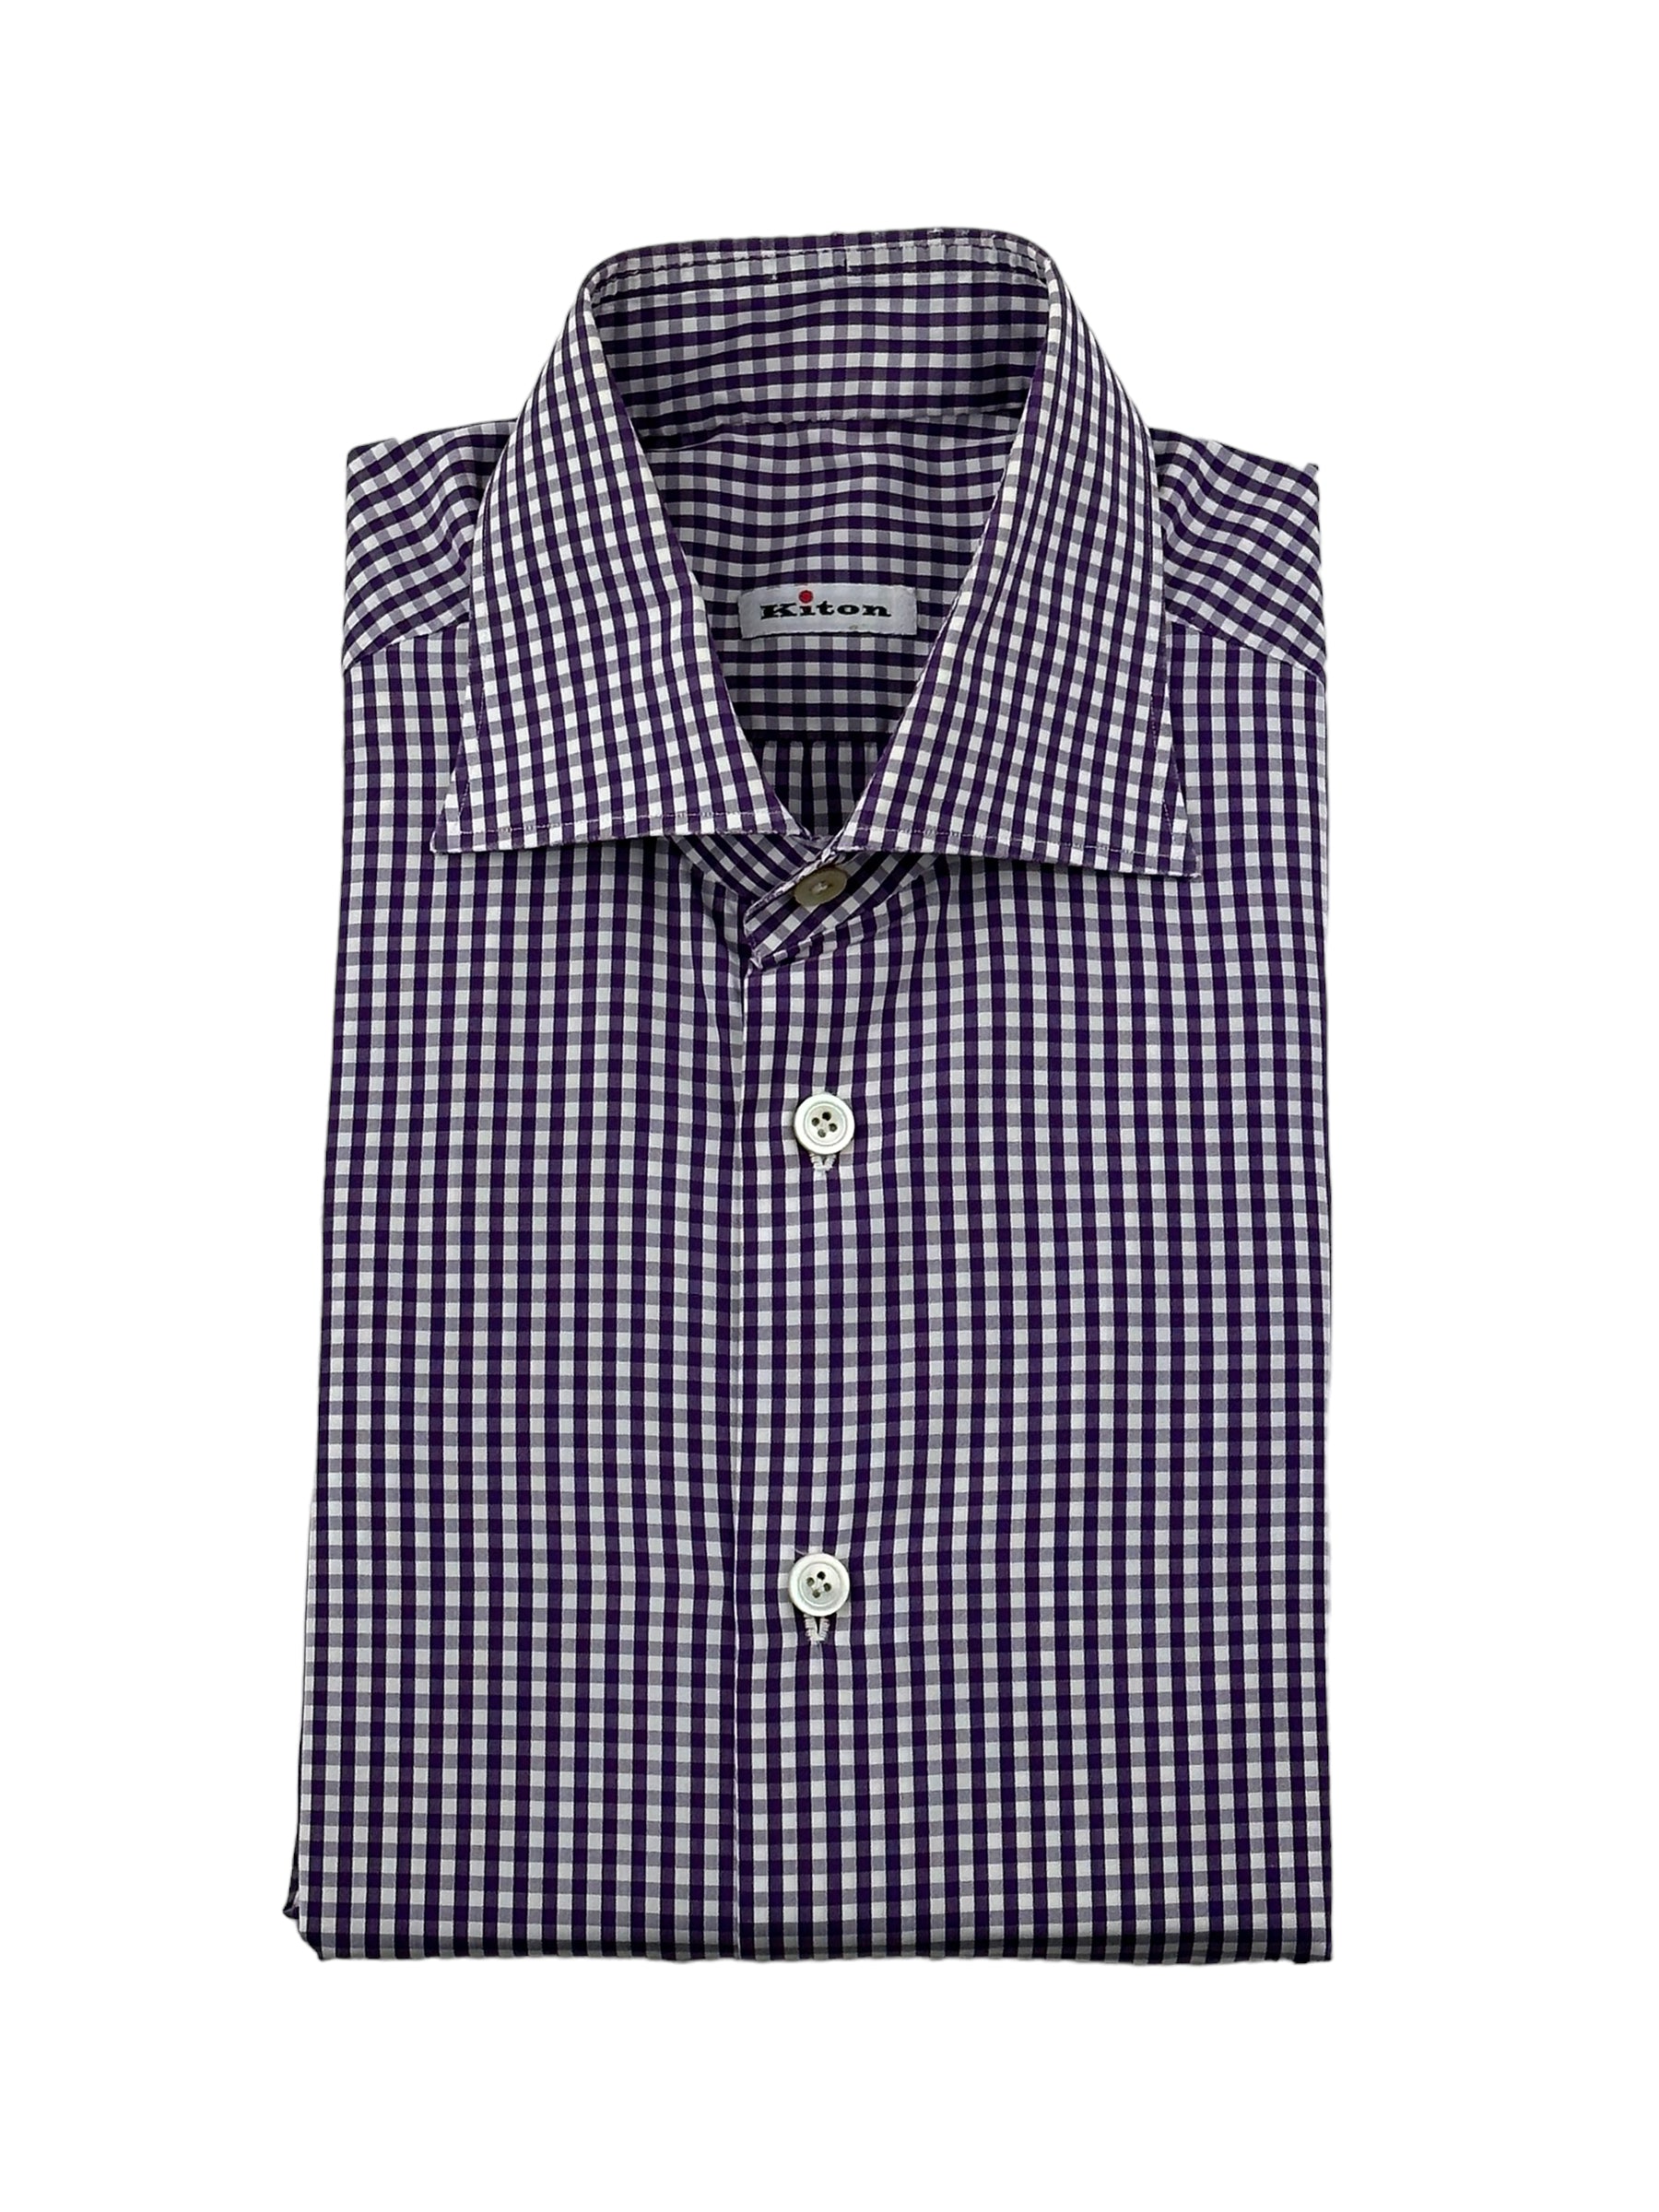 Kiton Purple Gingham Check Shirt